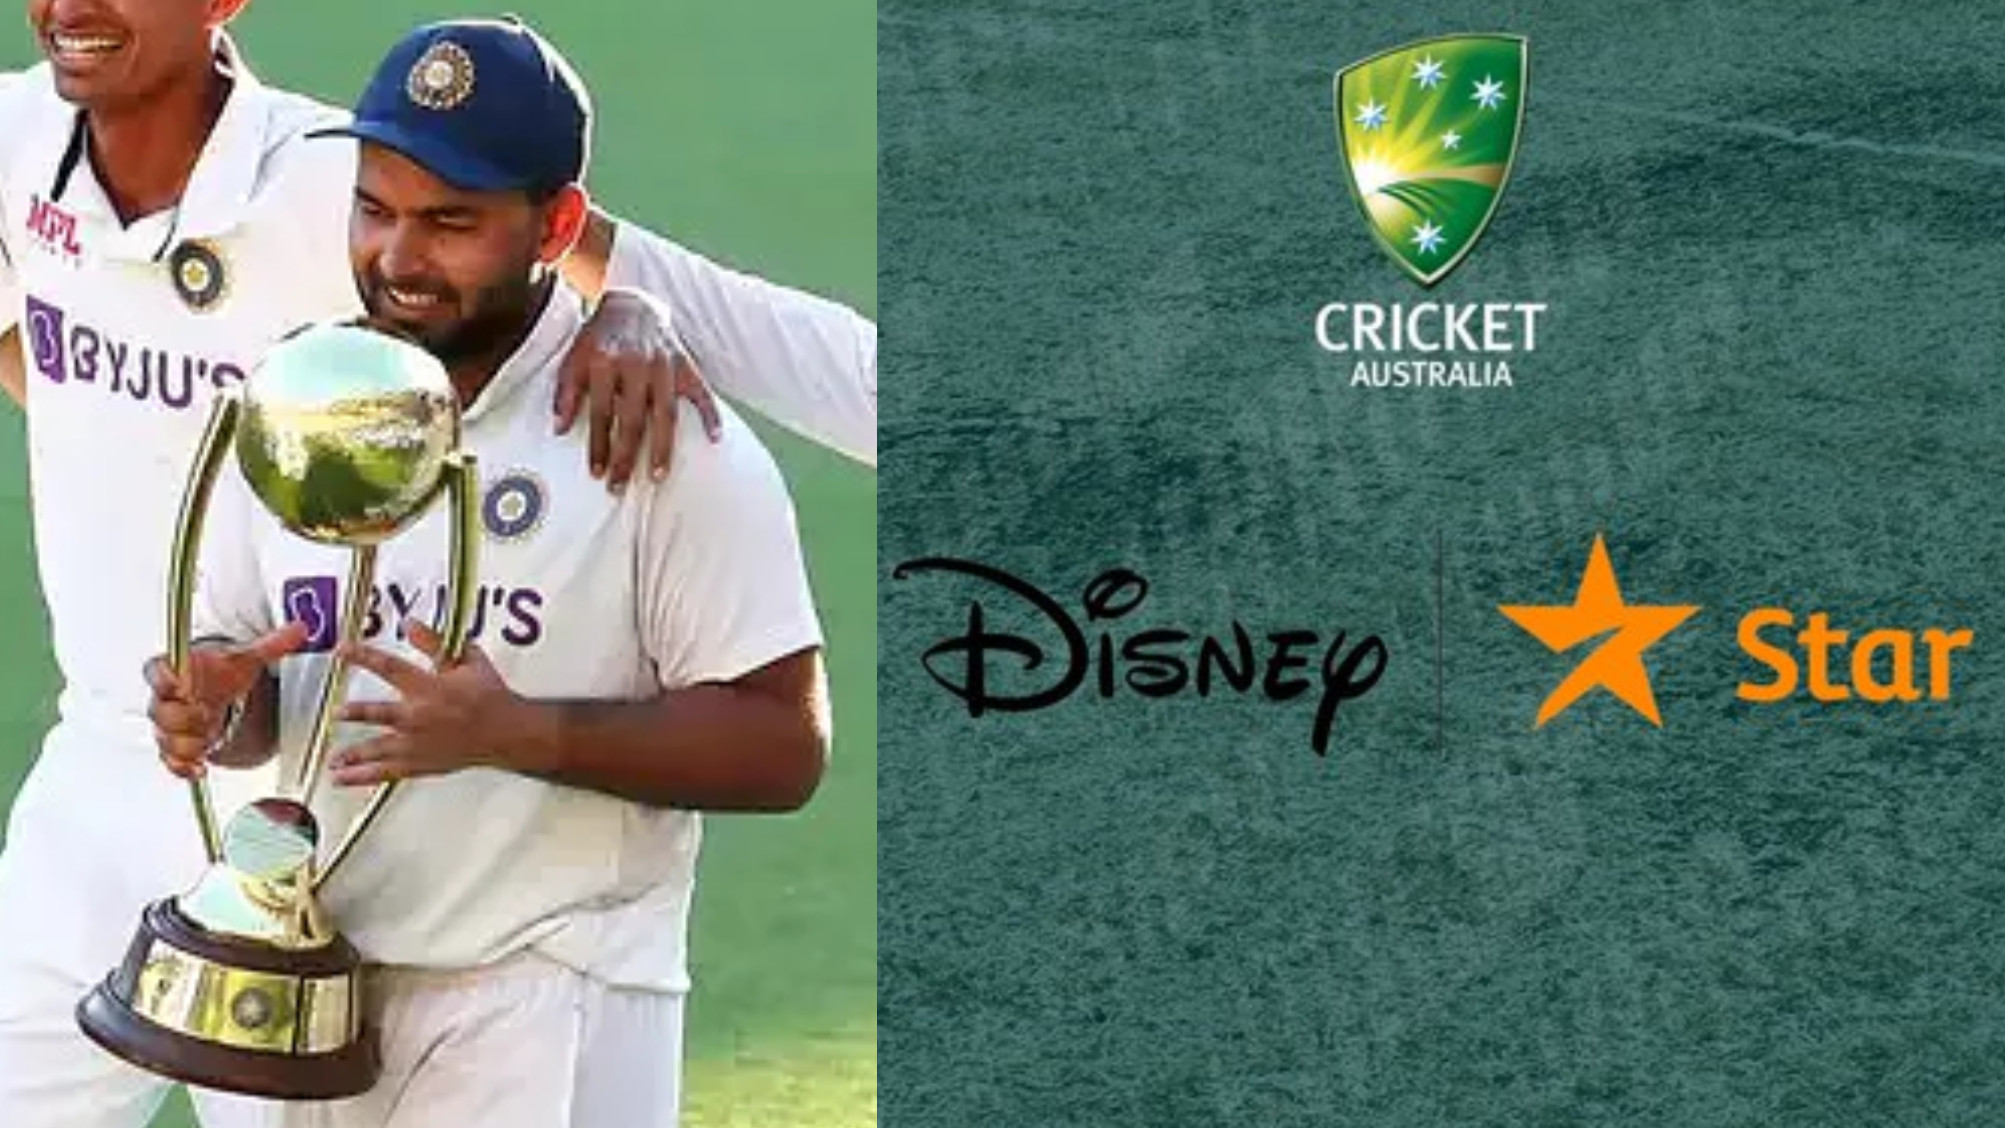 Rishabh Pant’s Gabba Test knock reason behind Cricket Australia’s mega-deal with Disney Star- Report